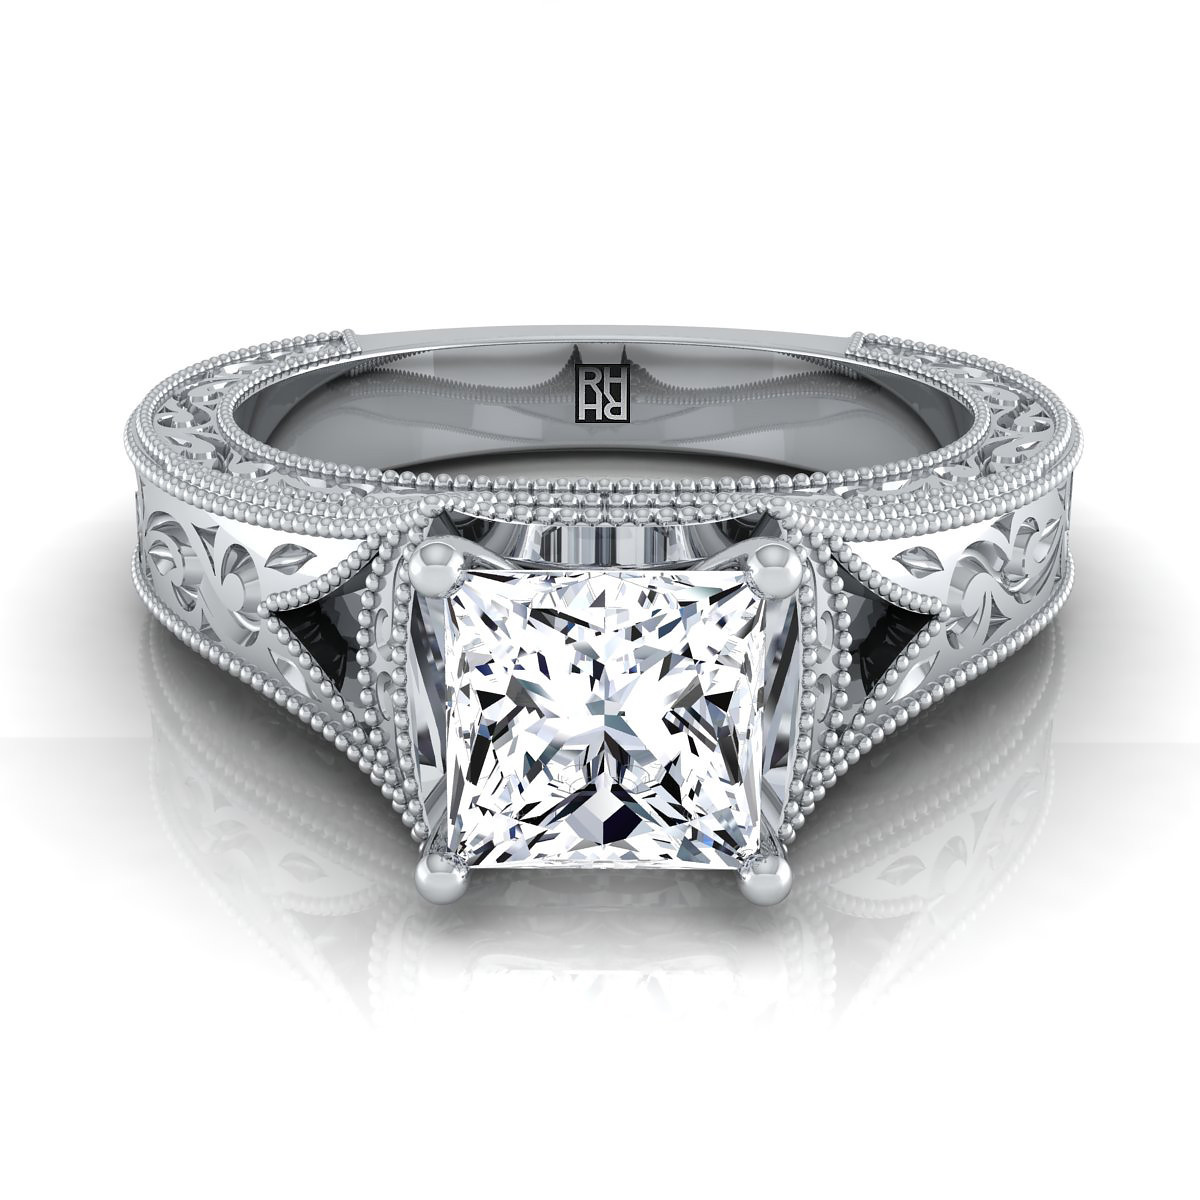 Princess Cut Vintage Engagement Ring
 Princess Cut Vintage Inspired Engraved Engagement Ring In